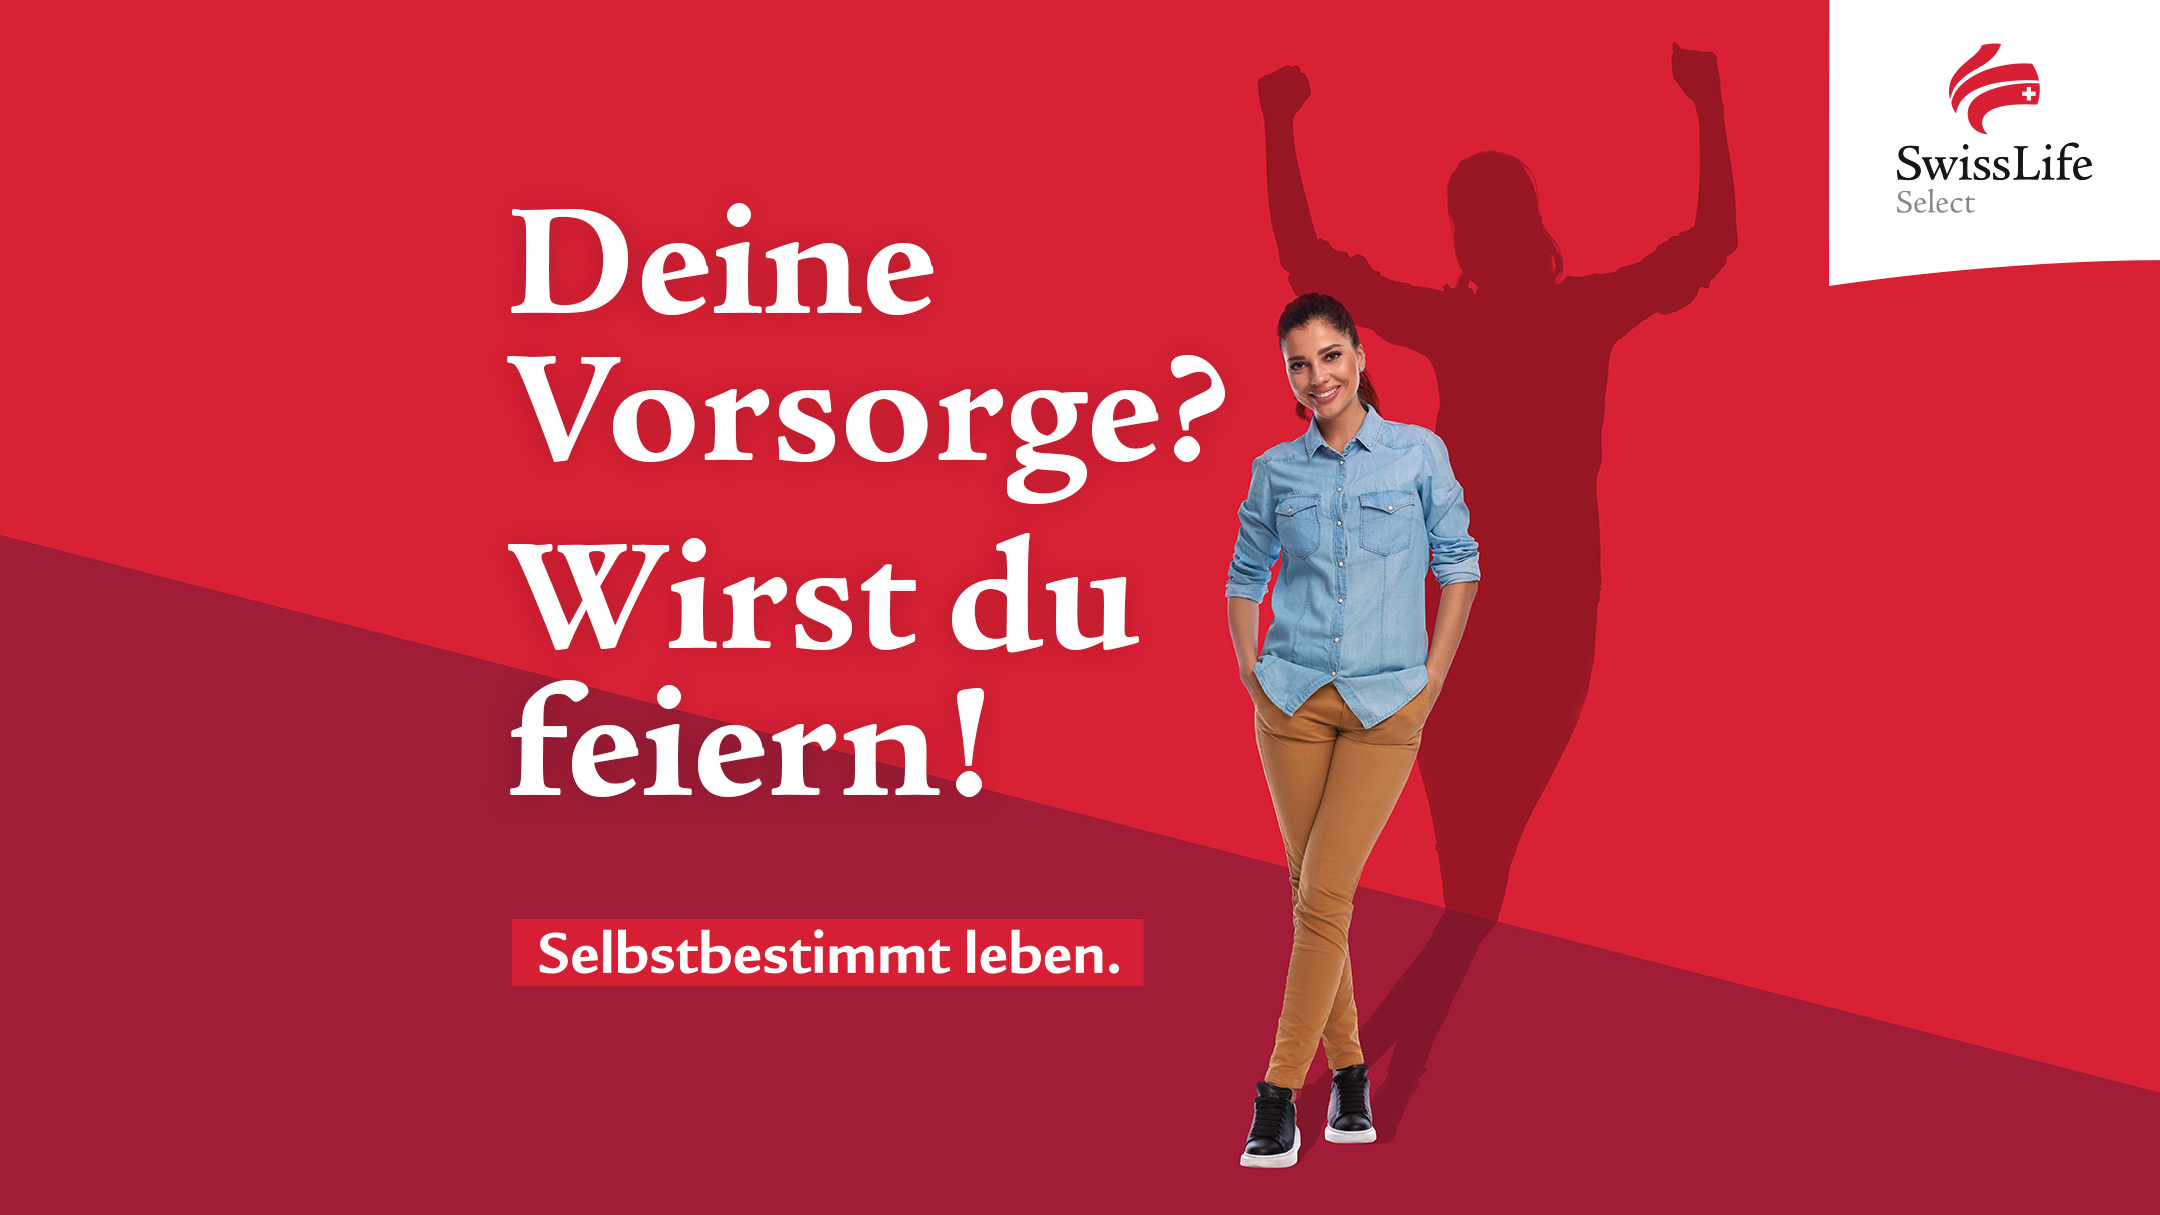 Bild 2 Swiss Life Select Deutschland GmbH in Hannover